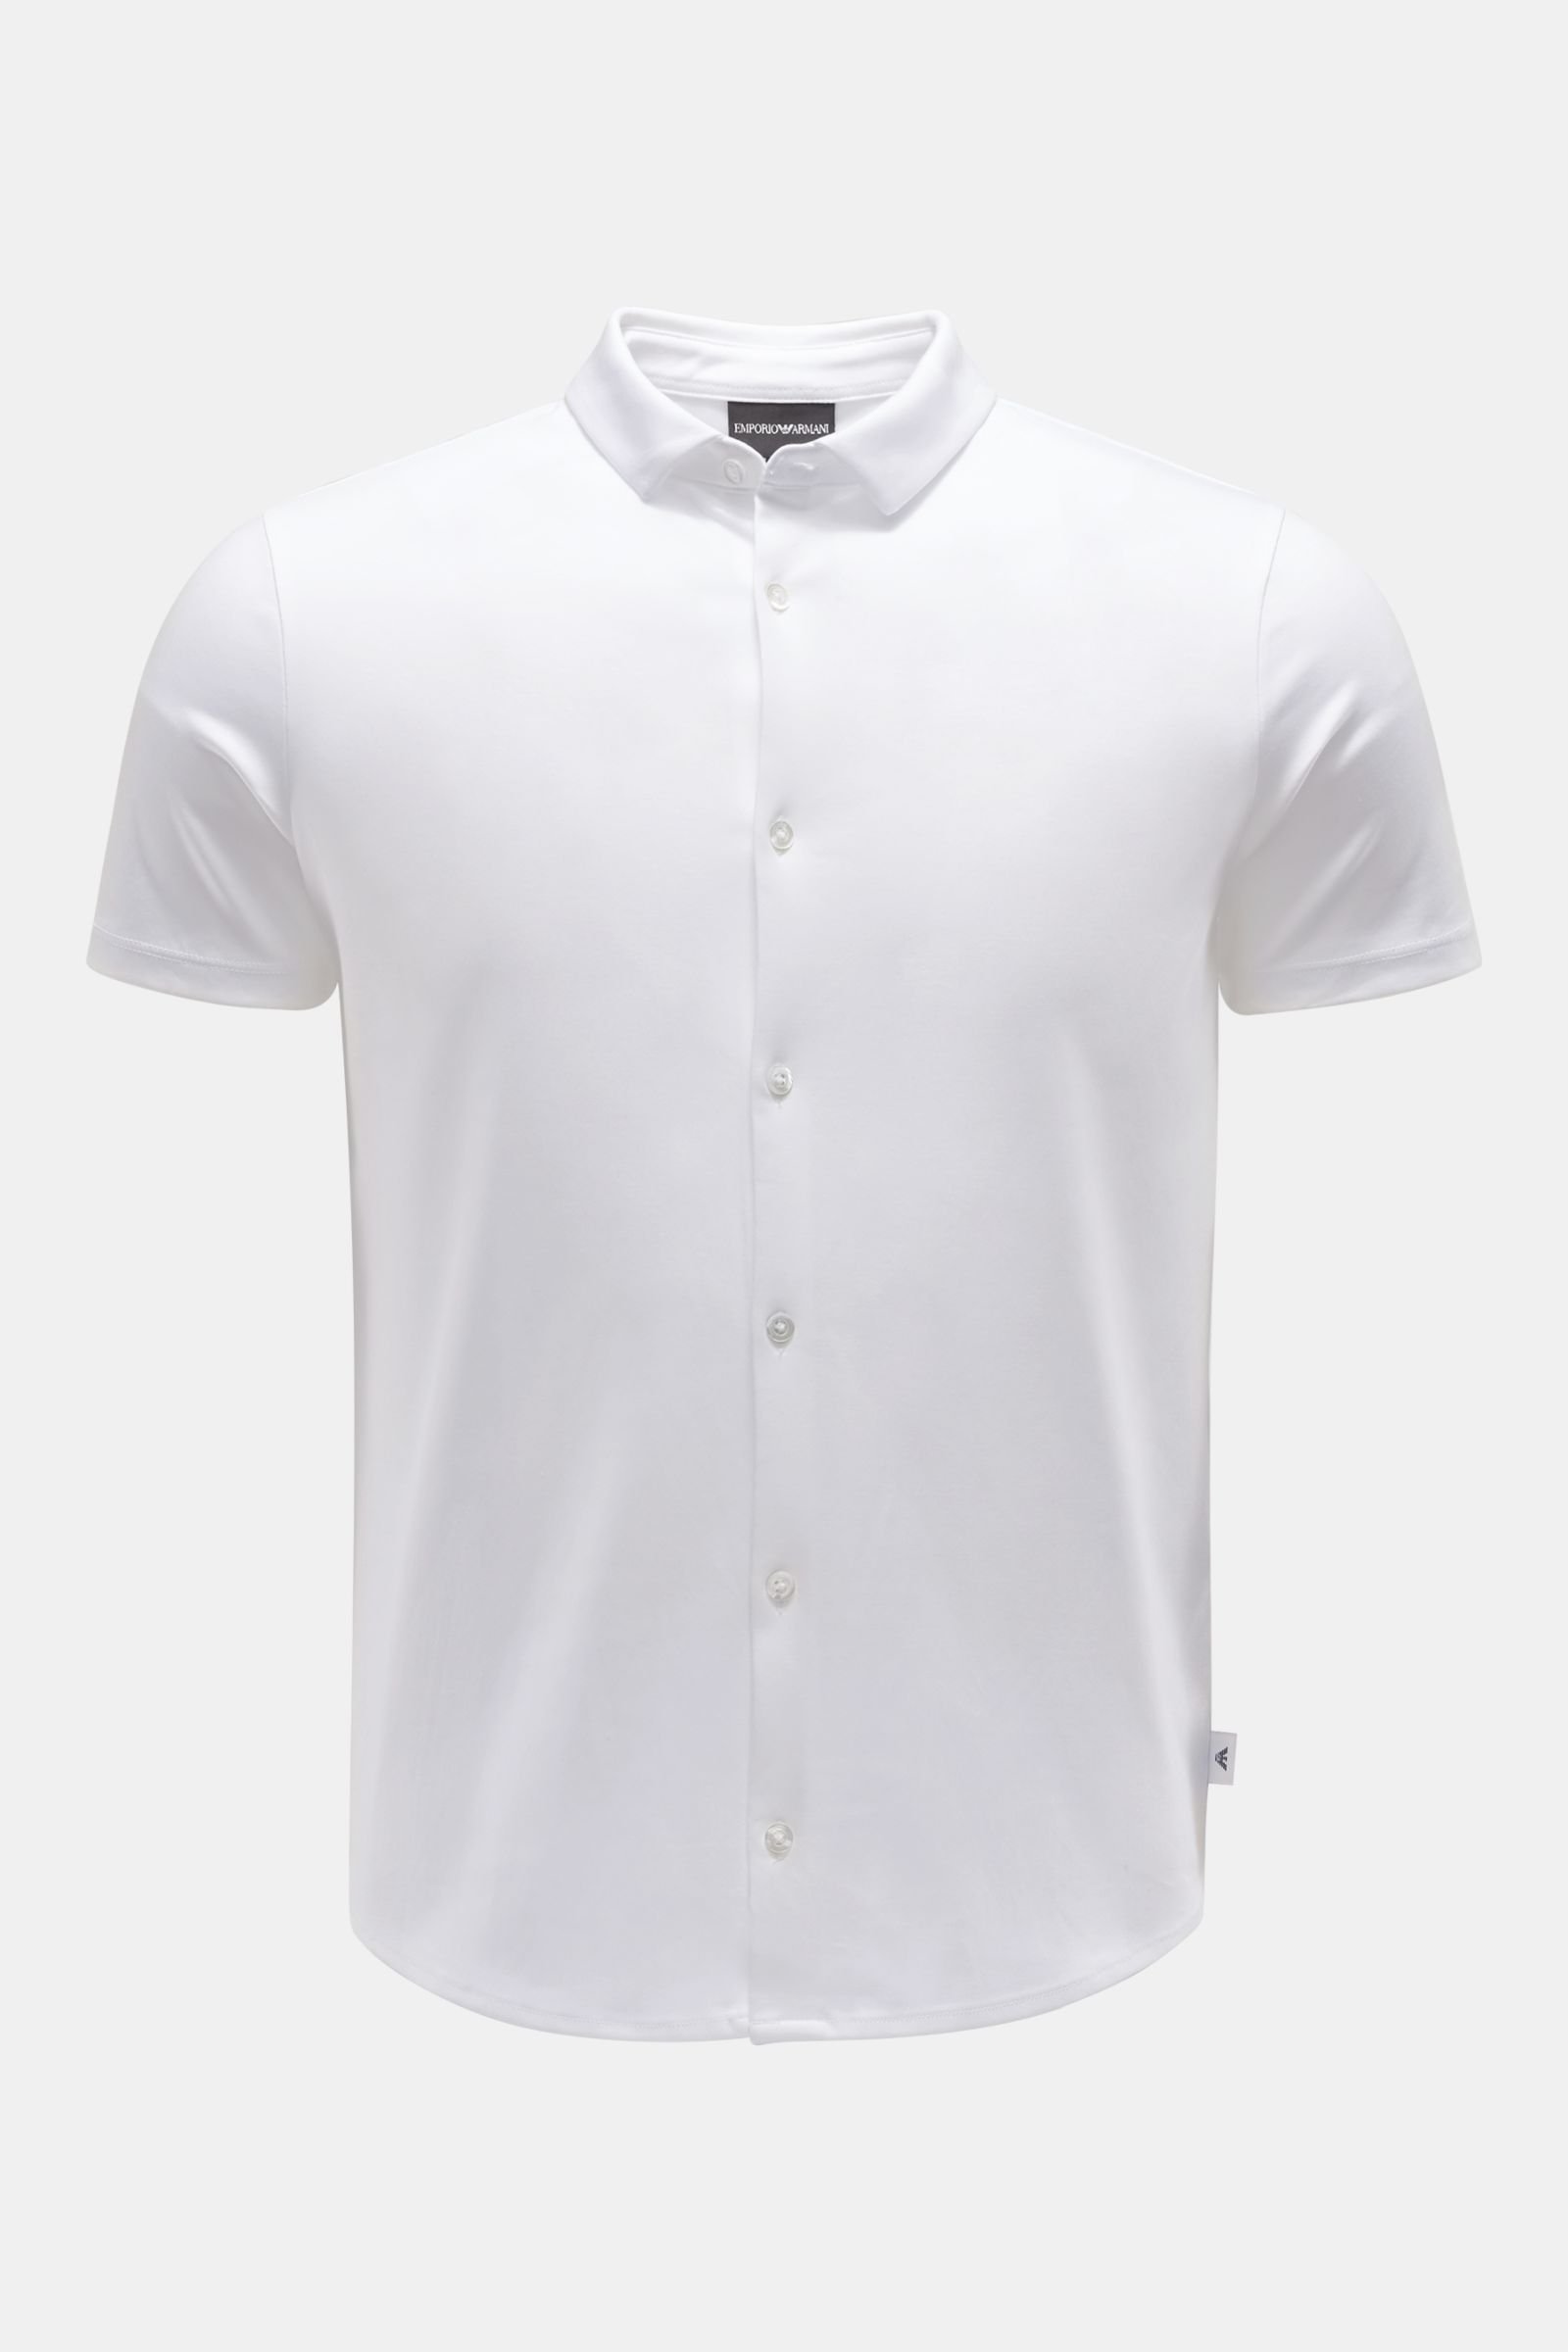 Jersey short-sleeve shirt slim collar white